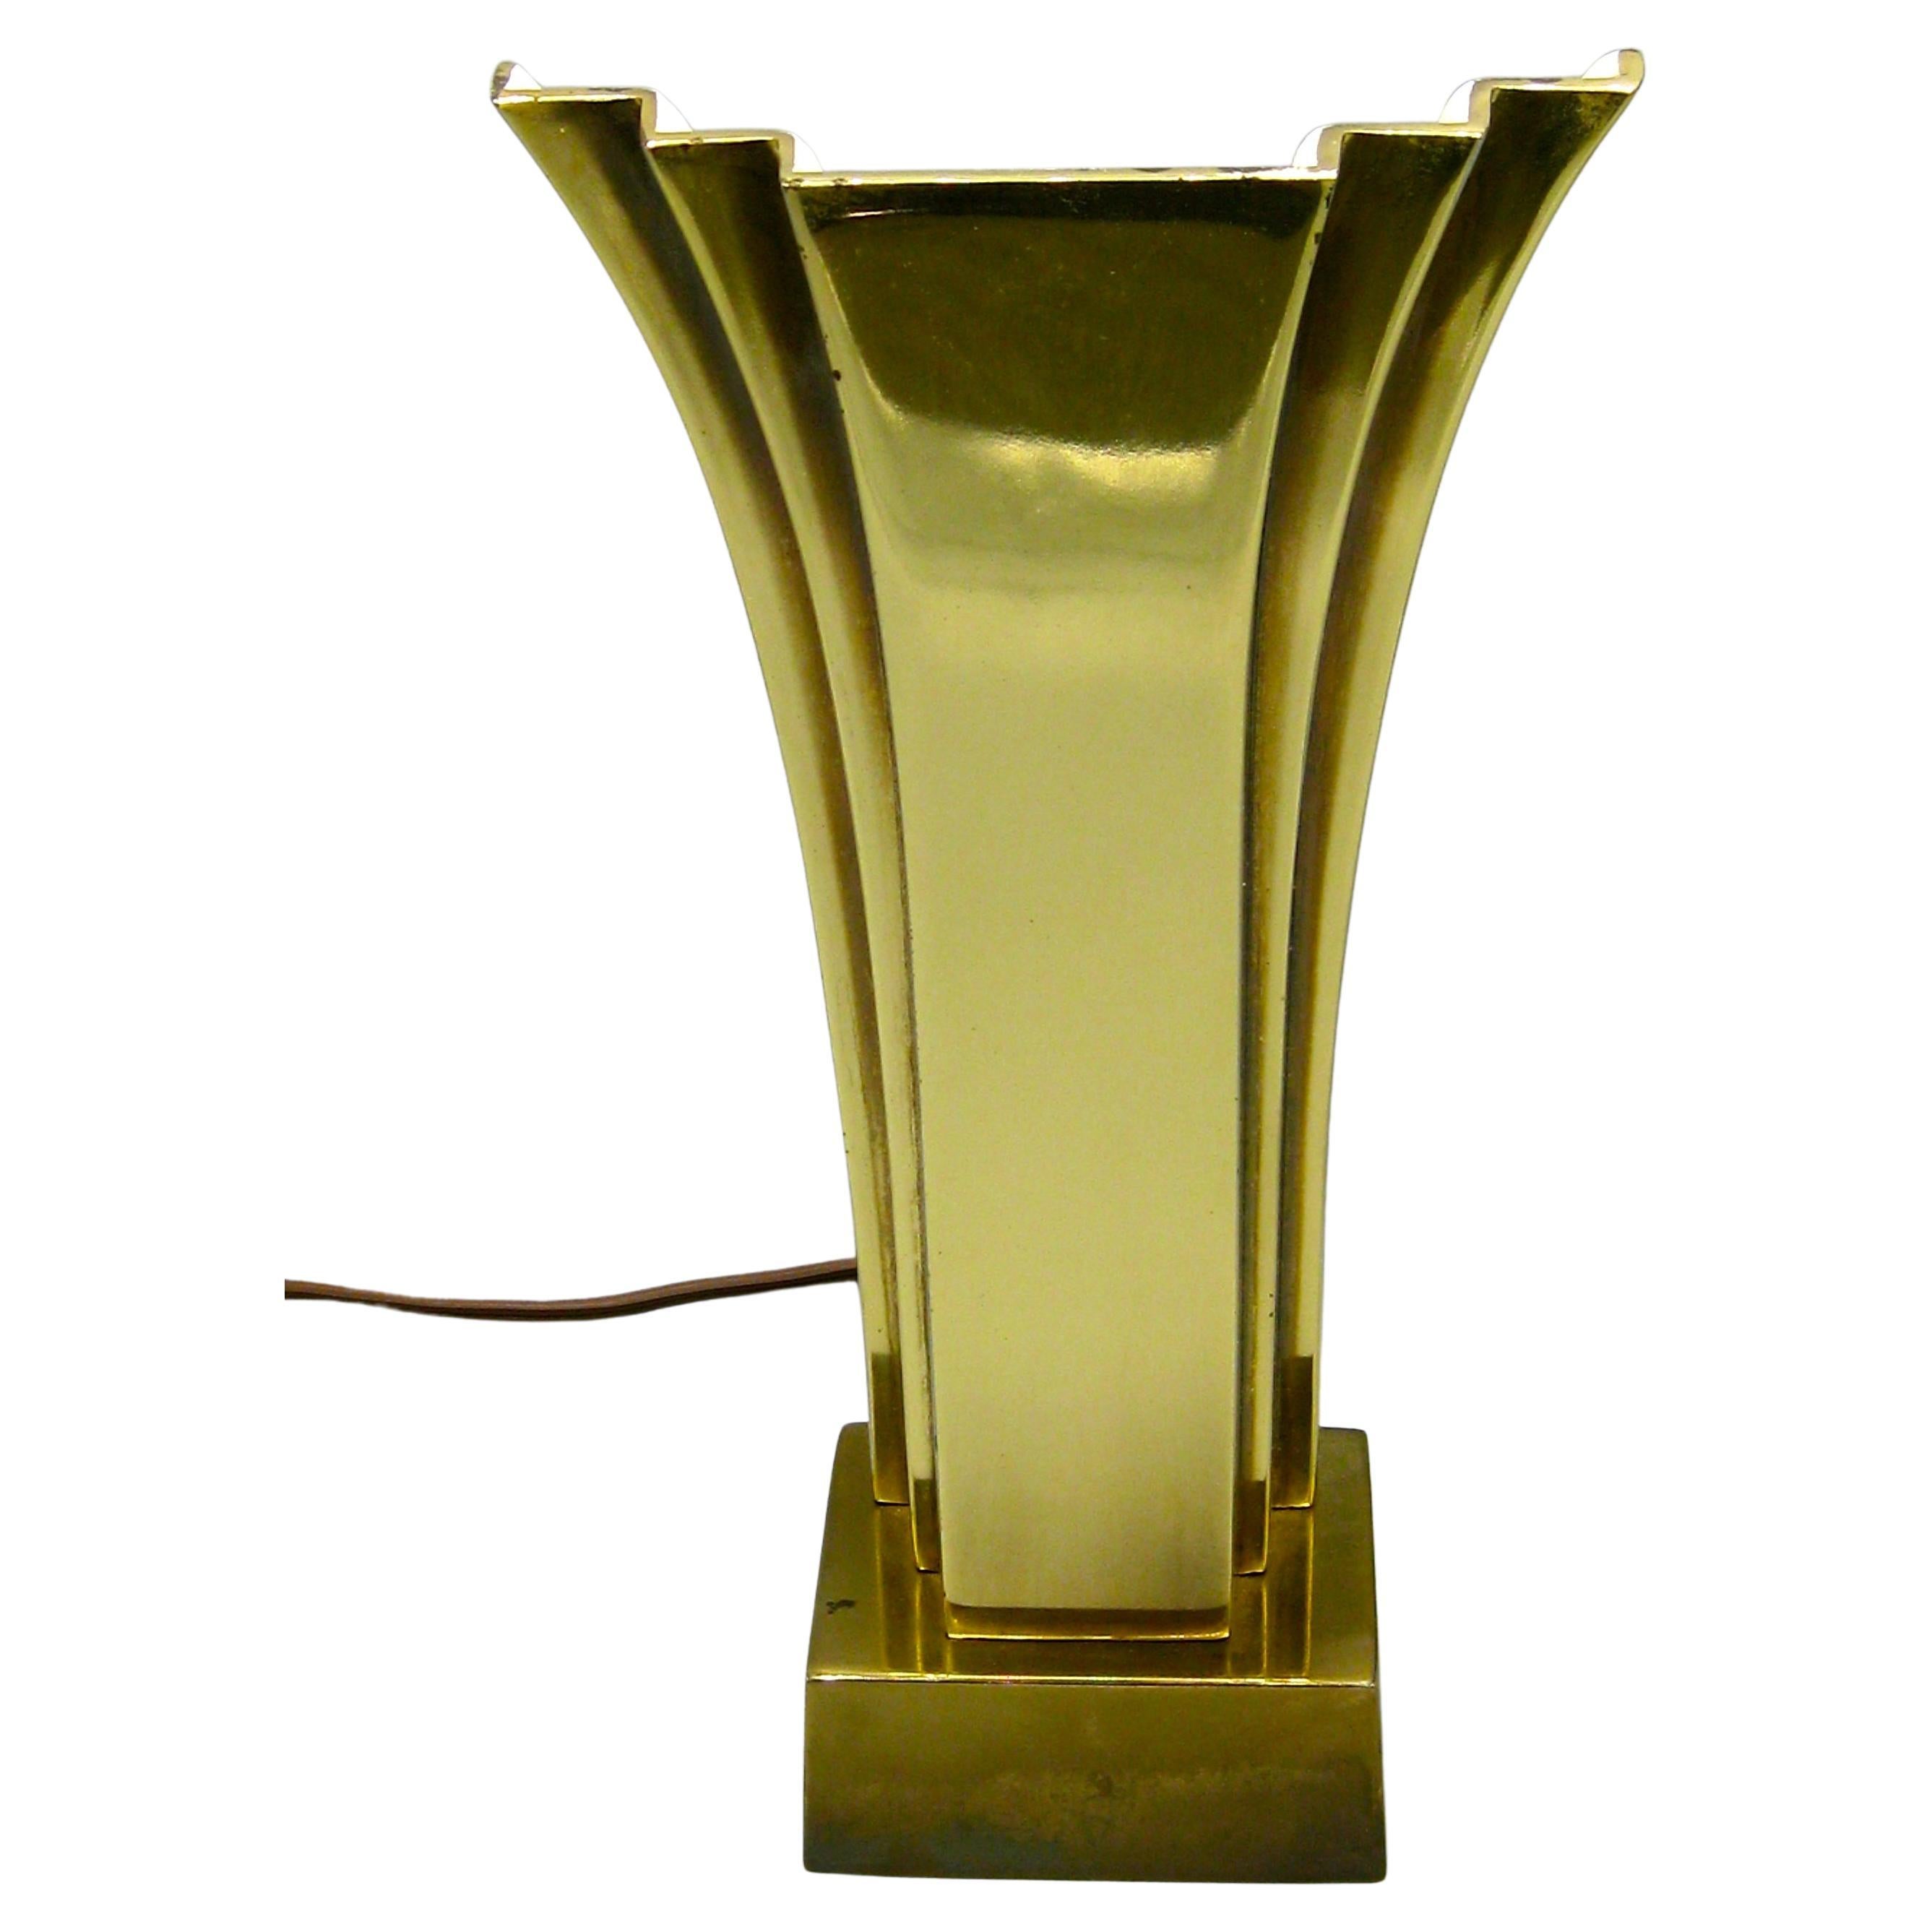 Stiffel Art Deco Revival Brass Desk or Table Fan Lamp Uplight, circa 1970s For Sale